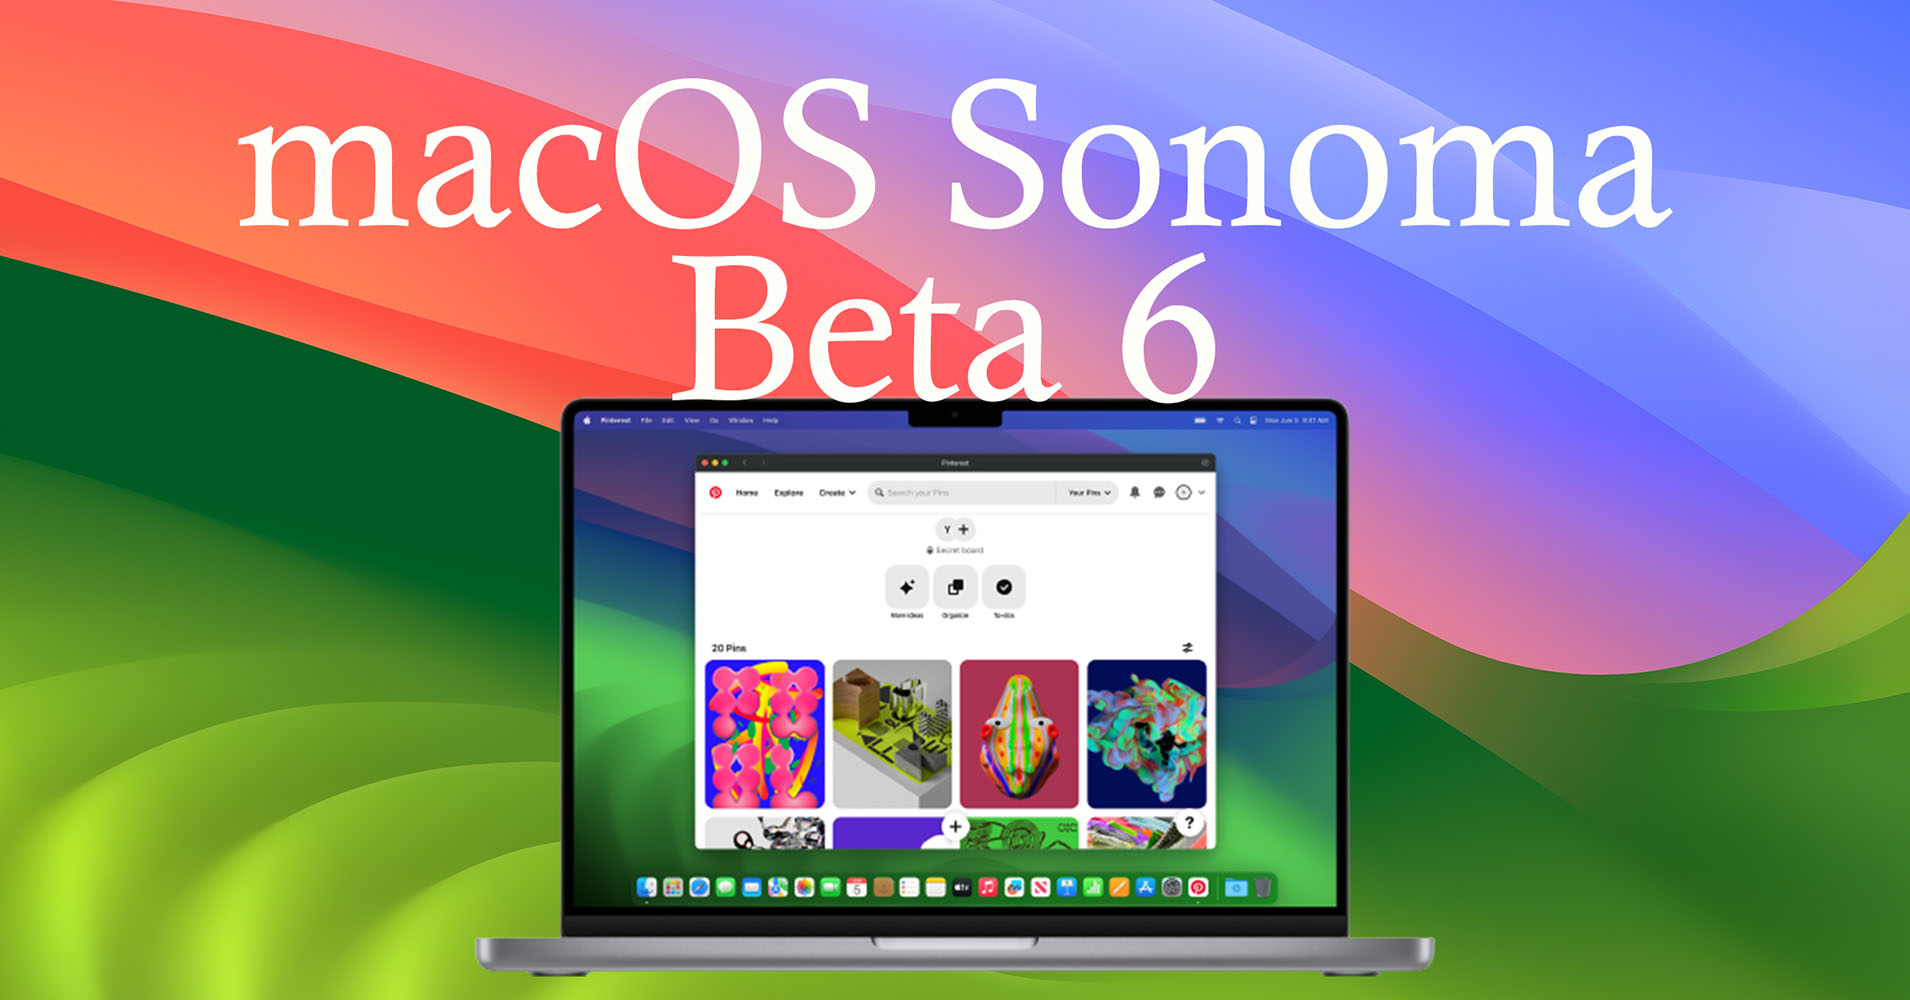 macOS Sonoma beta 6 what's new?